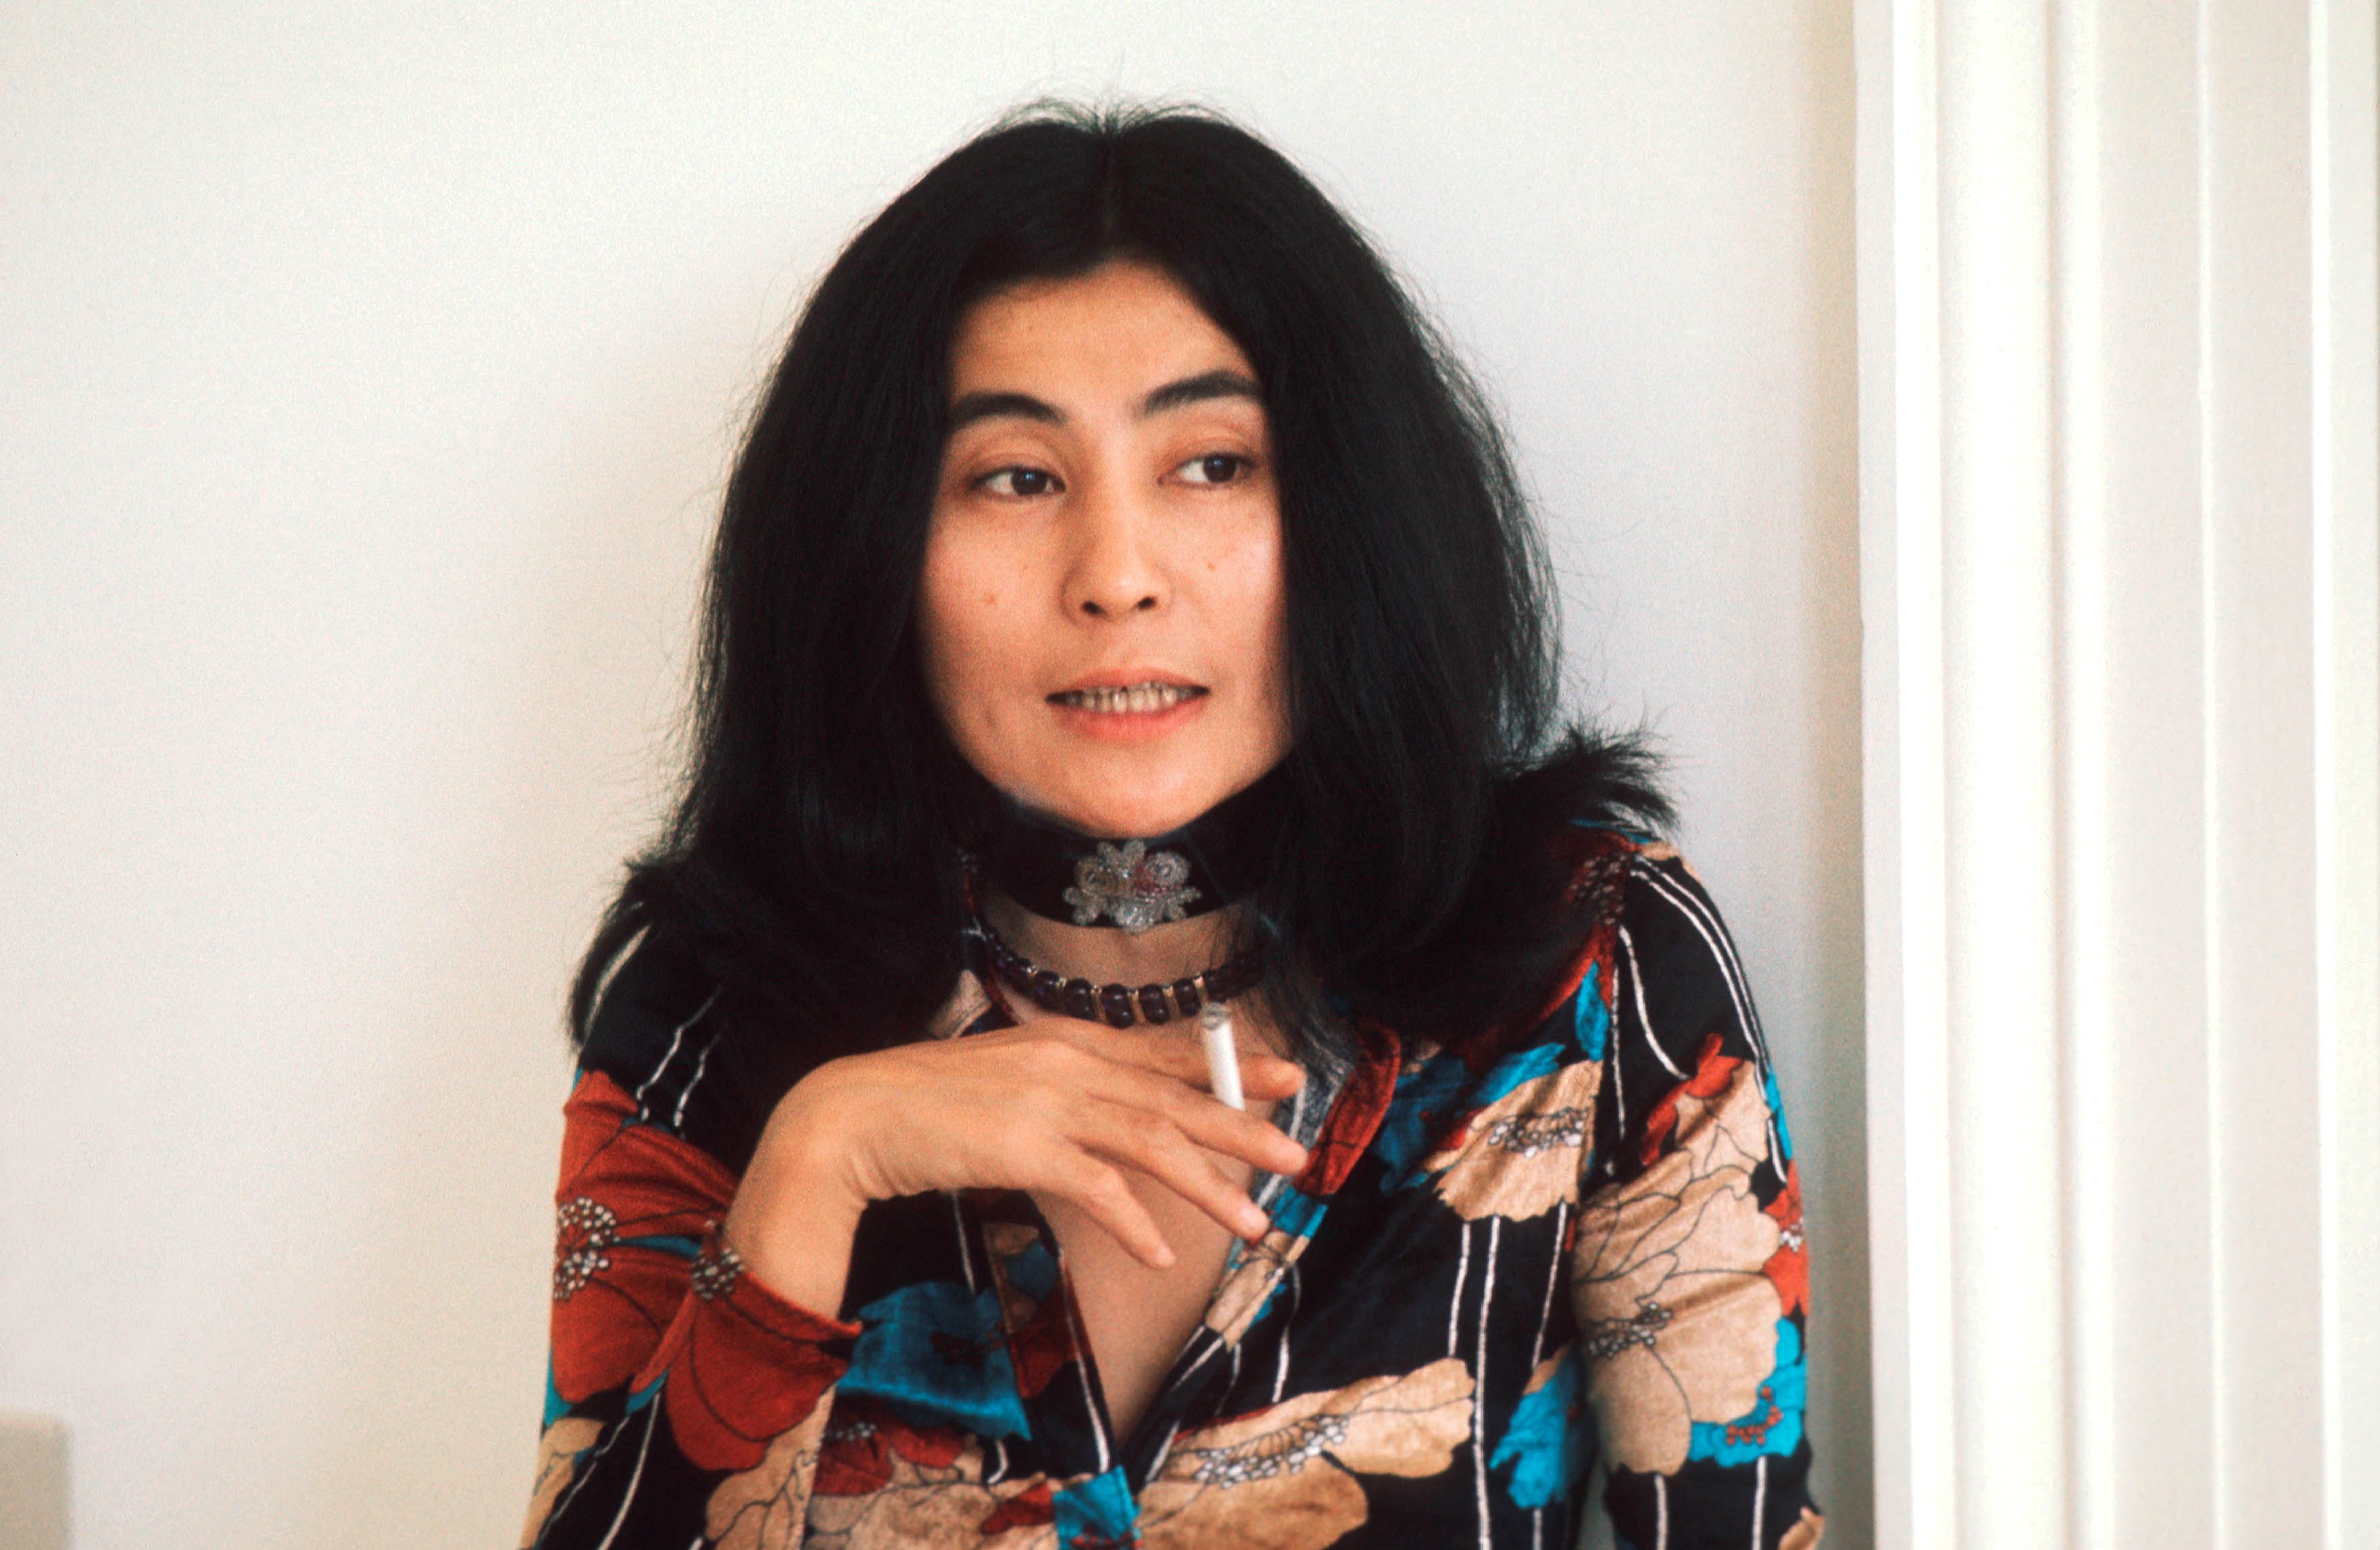 Yoko Ono with a cigarette